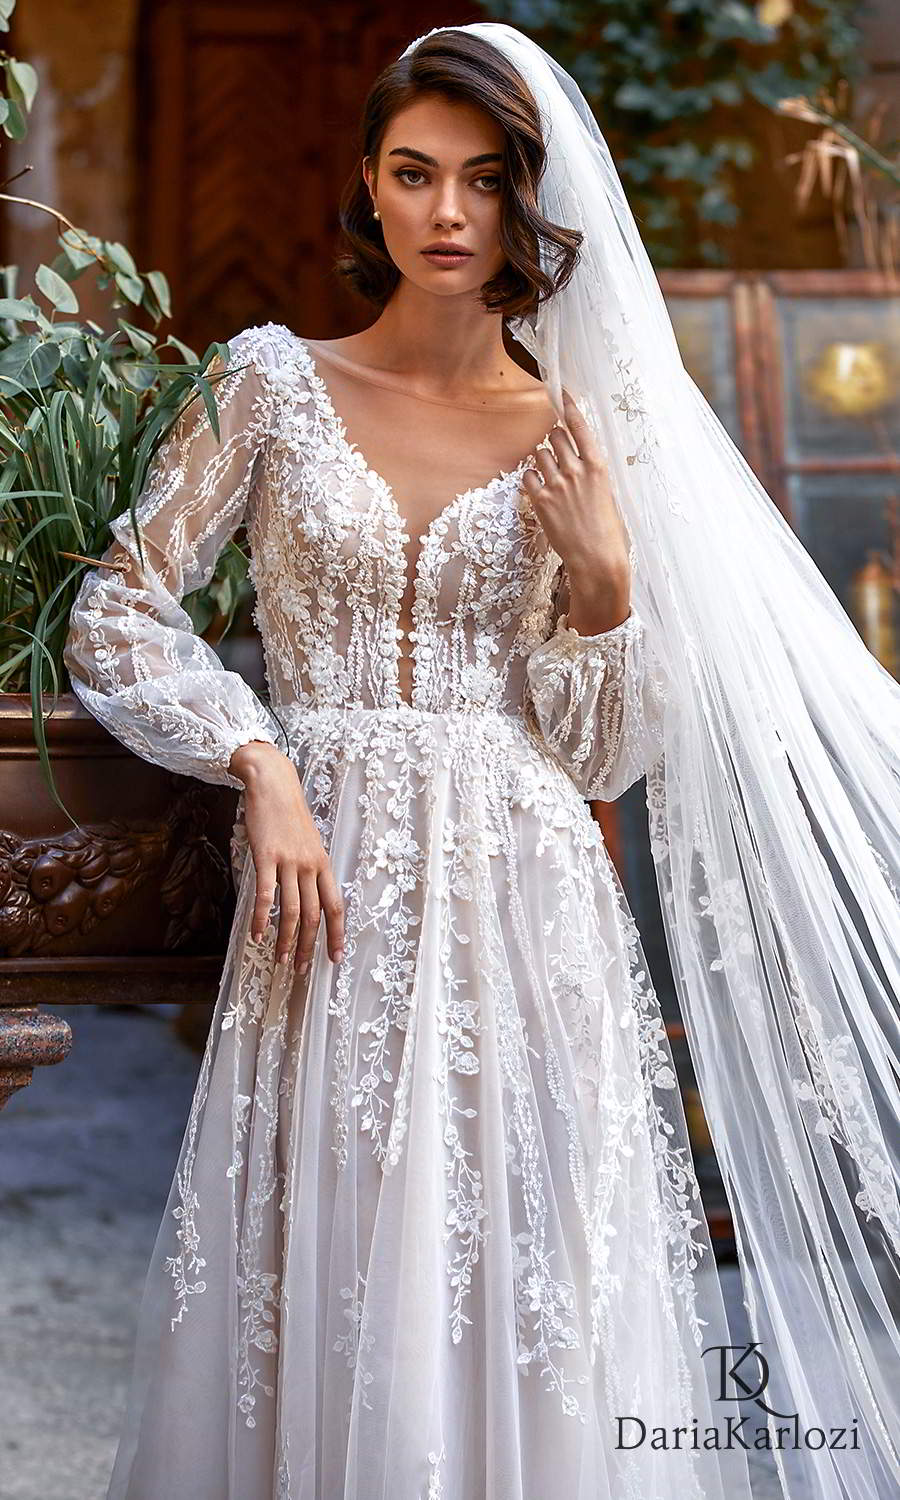 https://www.weddinginspirasi.com/wp-content/uploads/2021/03/daria-karlozi-2021-graceful-dream-bridal-long-bishop-sleeves-v-neckline-fully-embellished-boho-a-line-ball-gown-wedding-dress-chapel-train-veil-light-kiss-zv.jpg